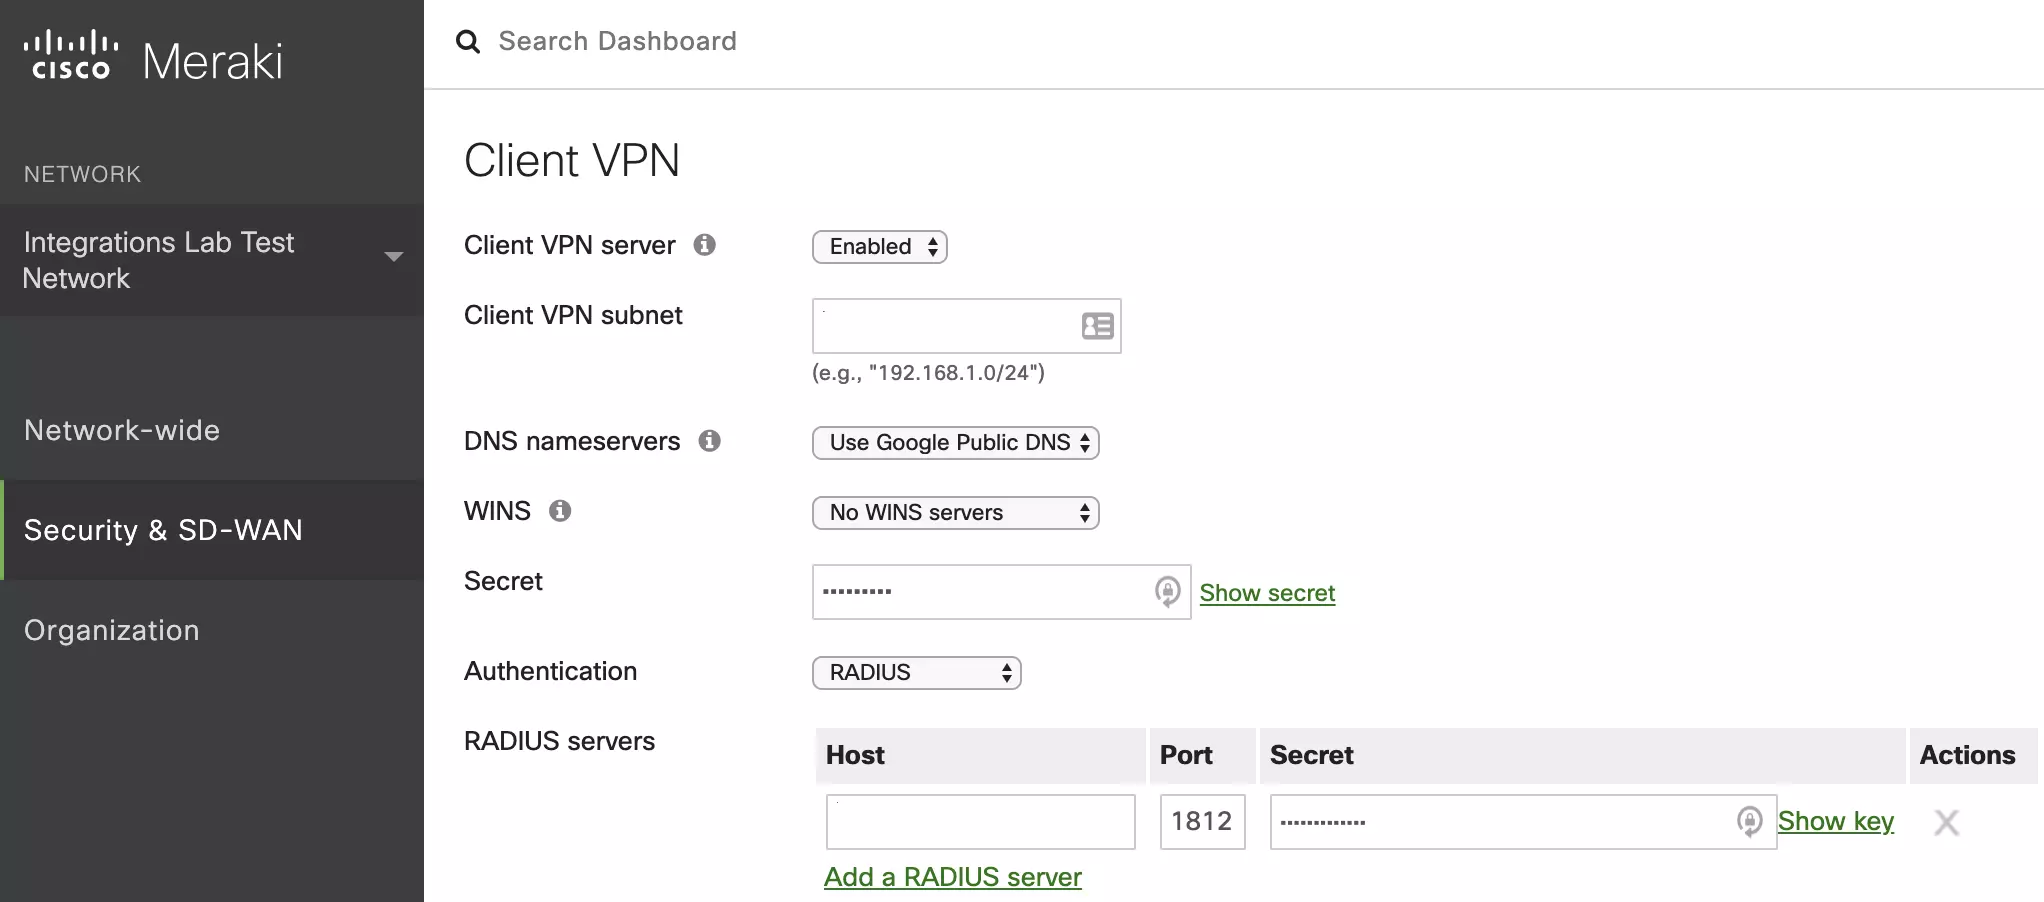 Meraki Client VPN MFA: Add Radius